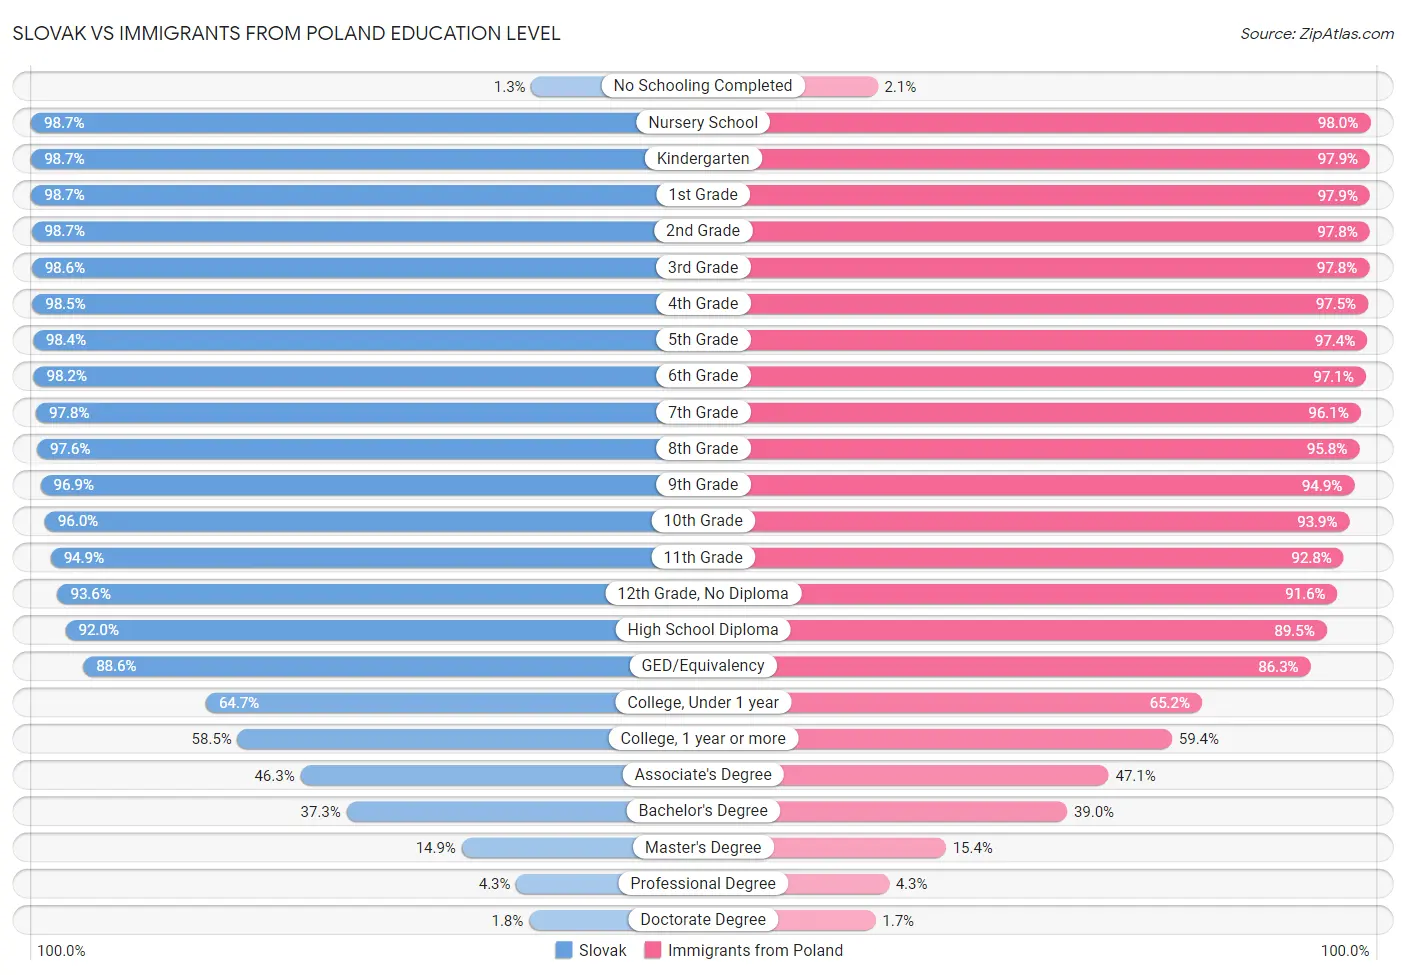 Slovak vs Immigrants from Poland Education Level